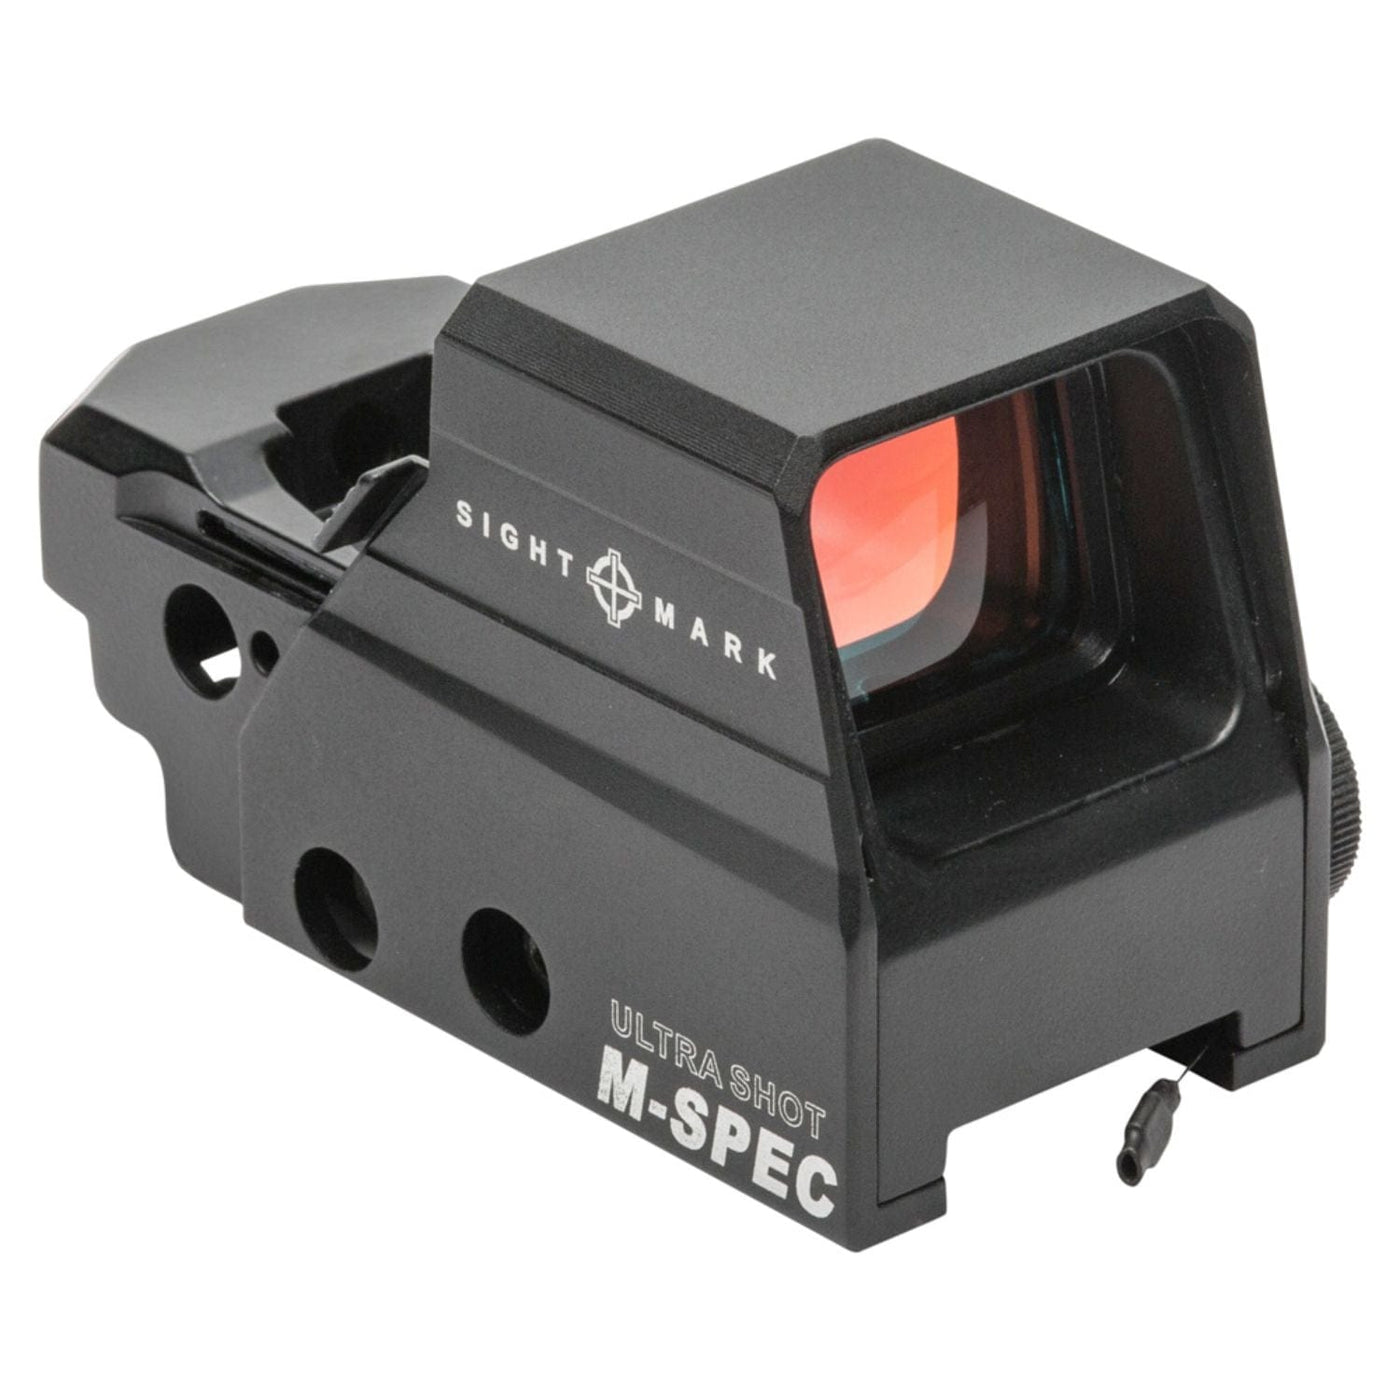 Sightmark Sightmark Ultra Shot M-Spec FMS Reflex Sight Optics And Sights